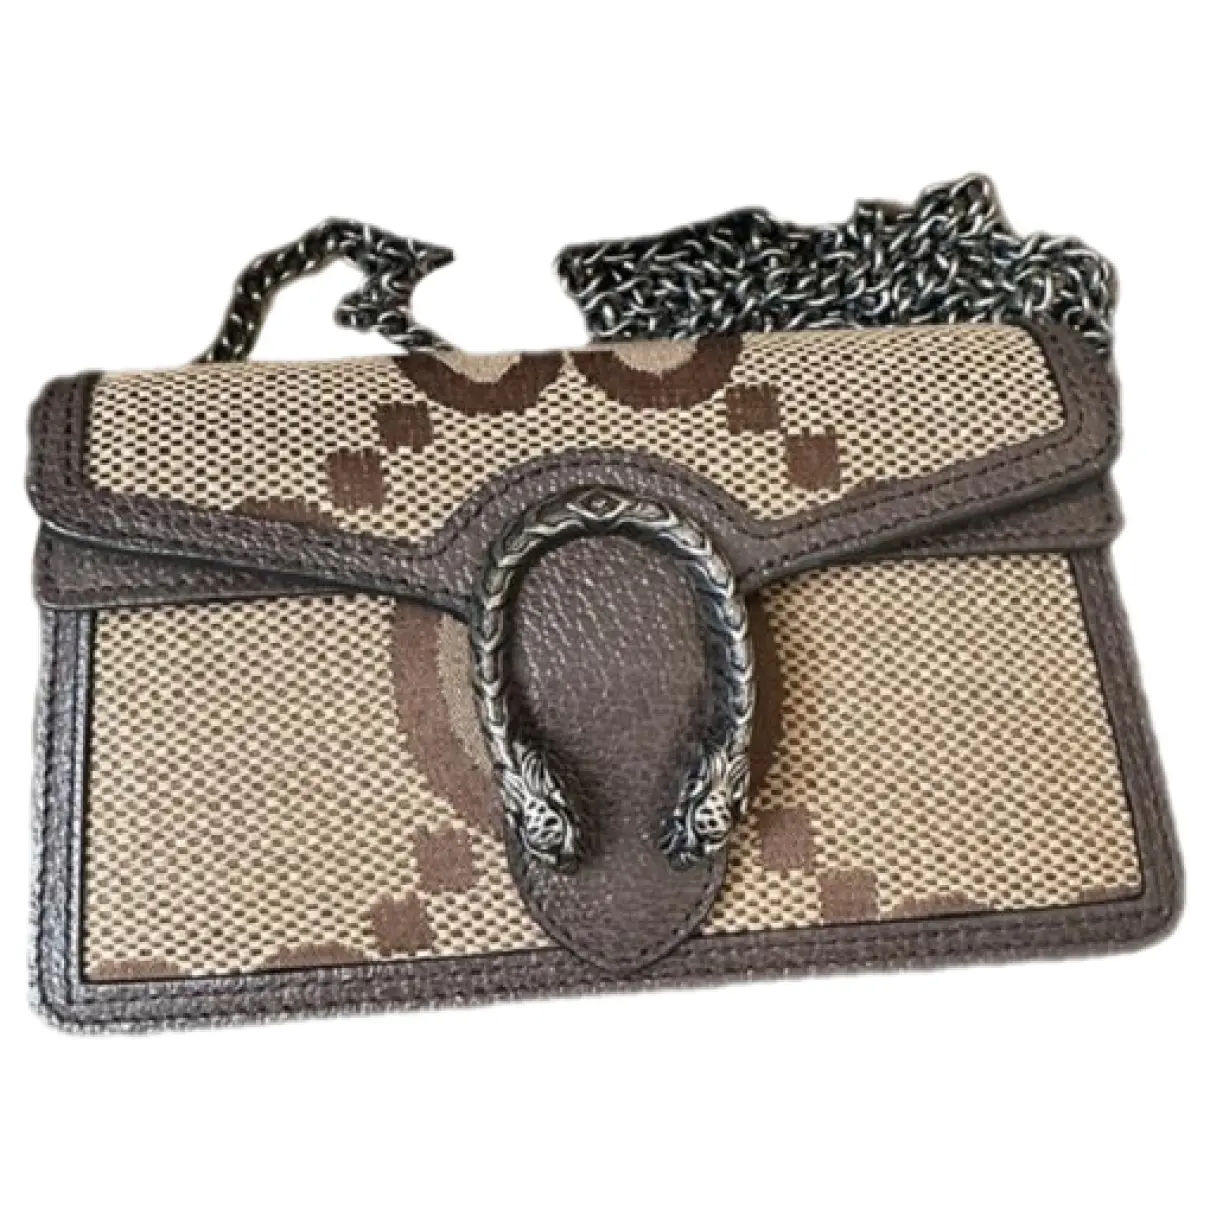 Dionysus leather handbag